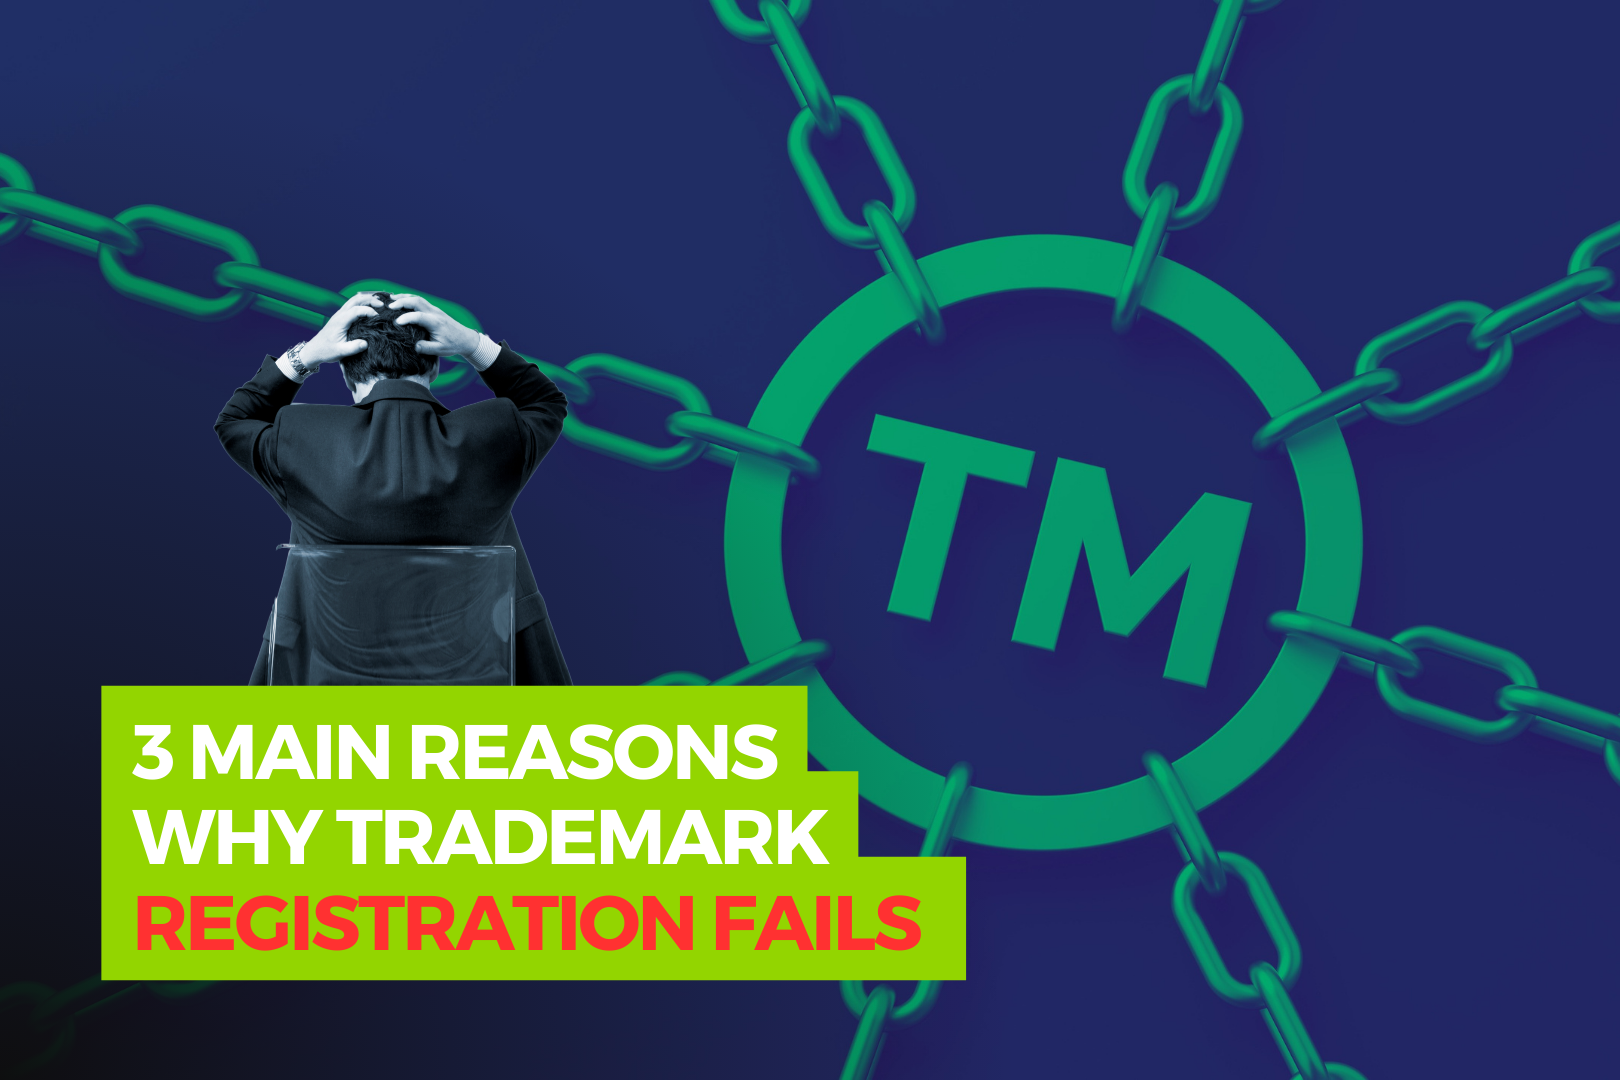 3 main reasons why trademark registration fails